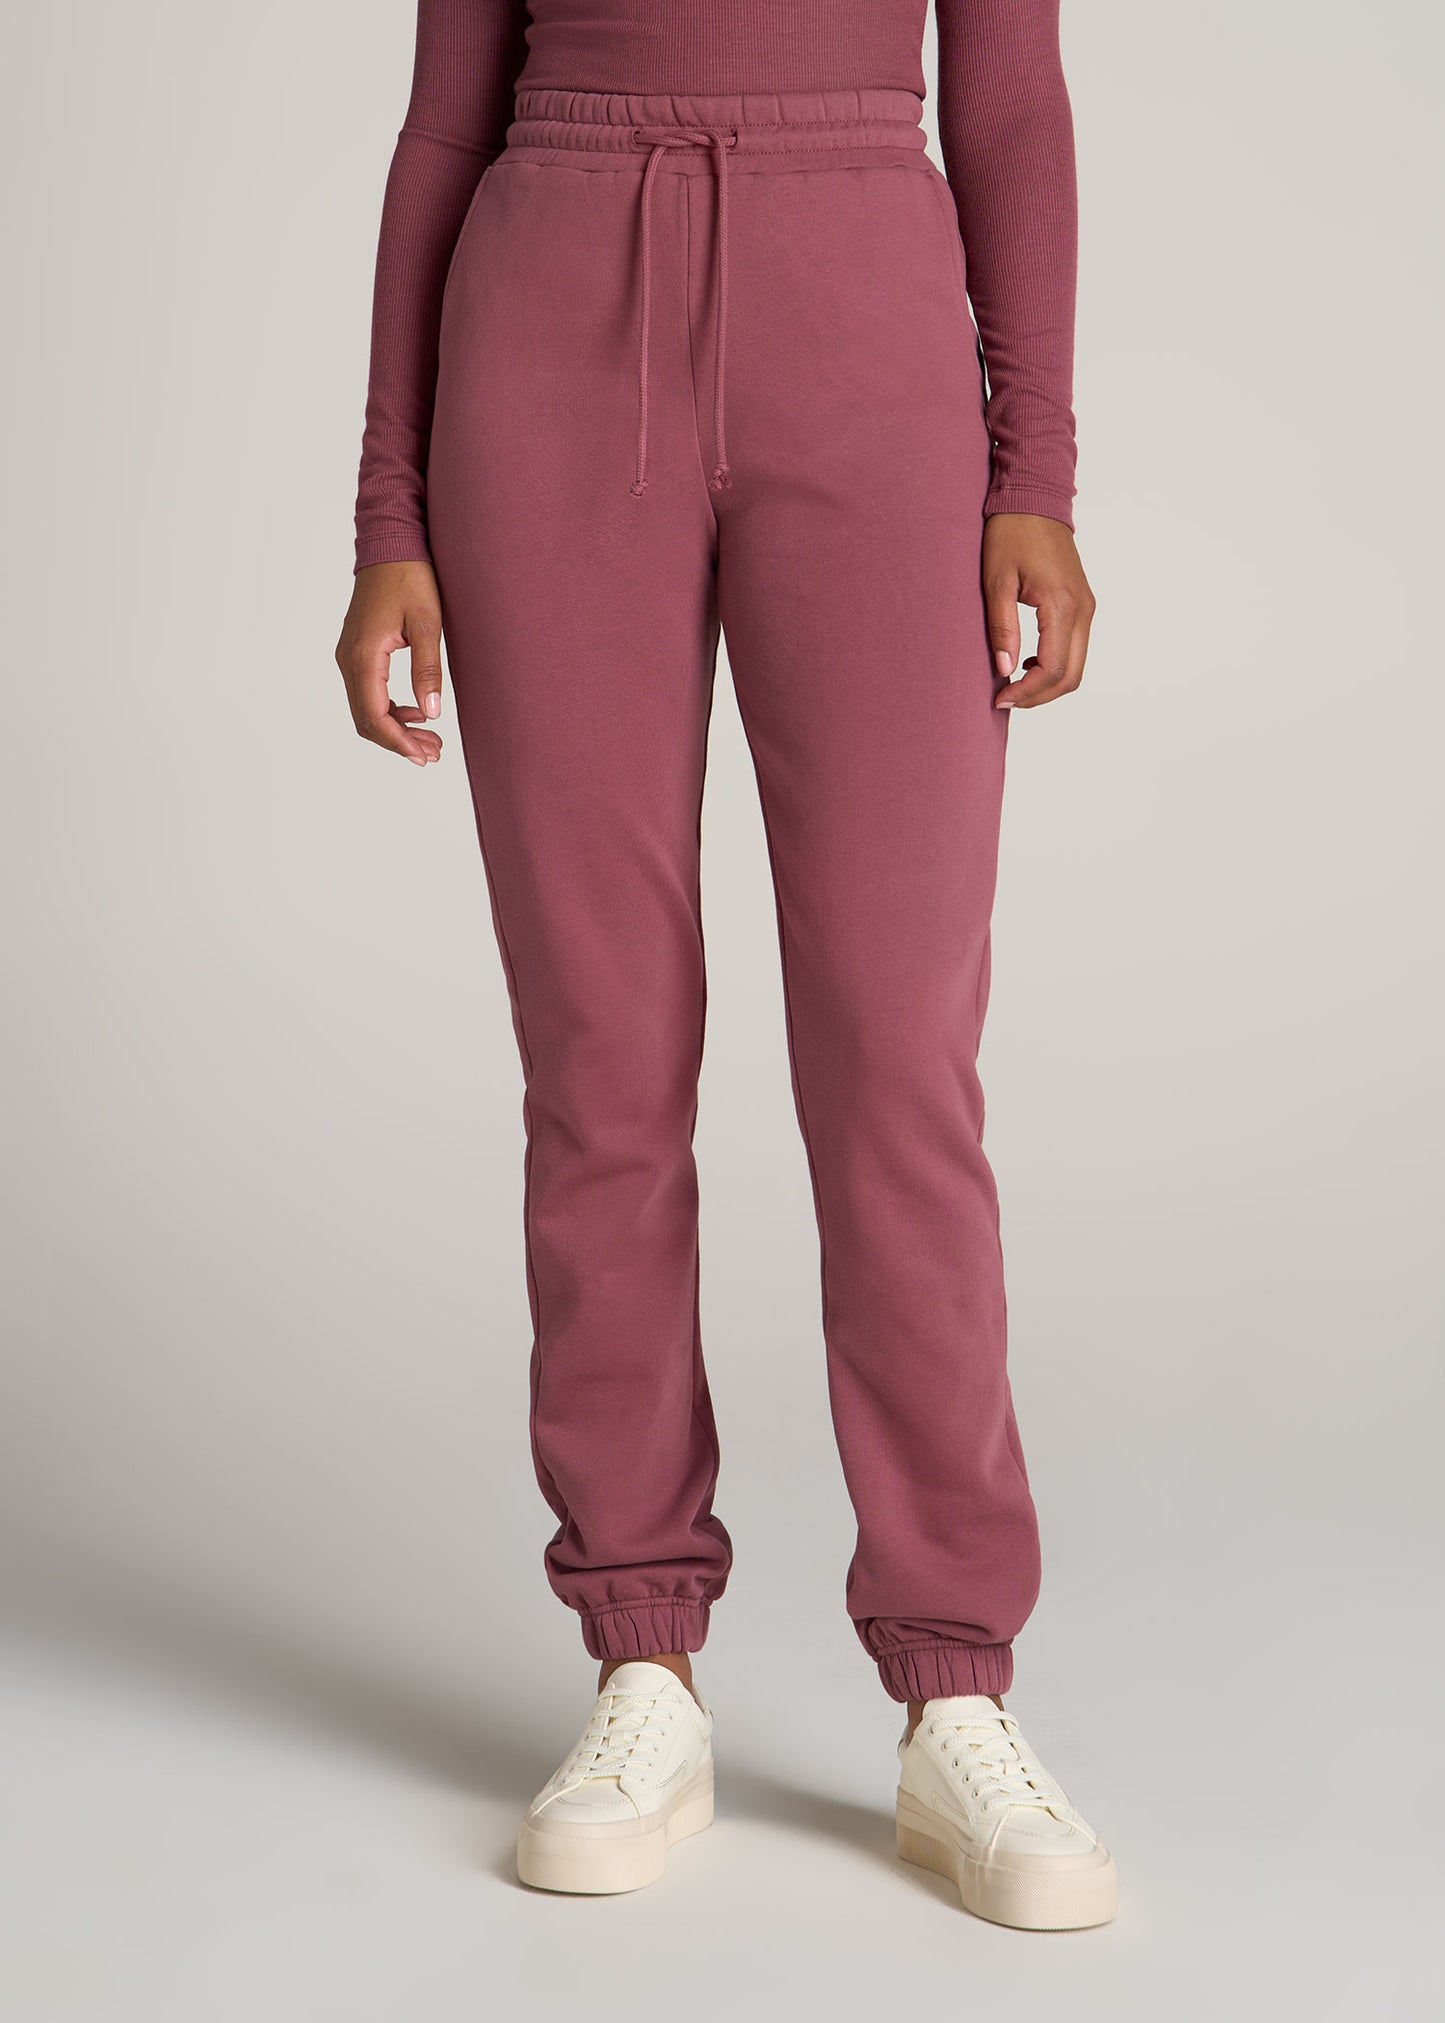 lululemon athletica, Pants & Jumpsuits, Lululemon Velour Loungewear Set  Grey Size 4